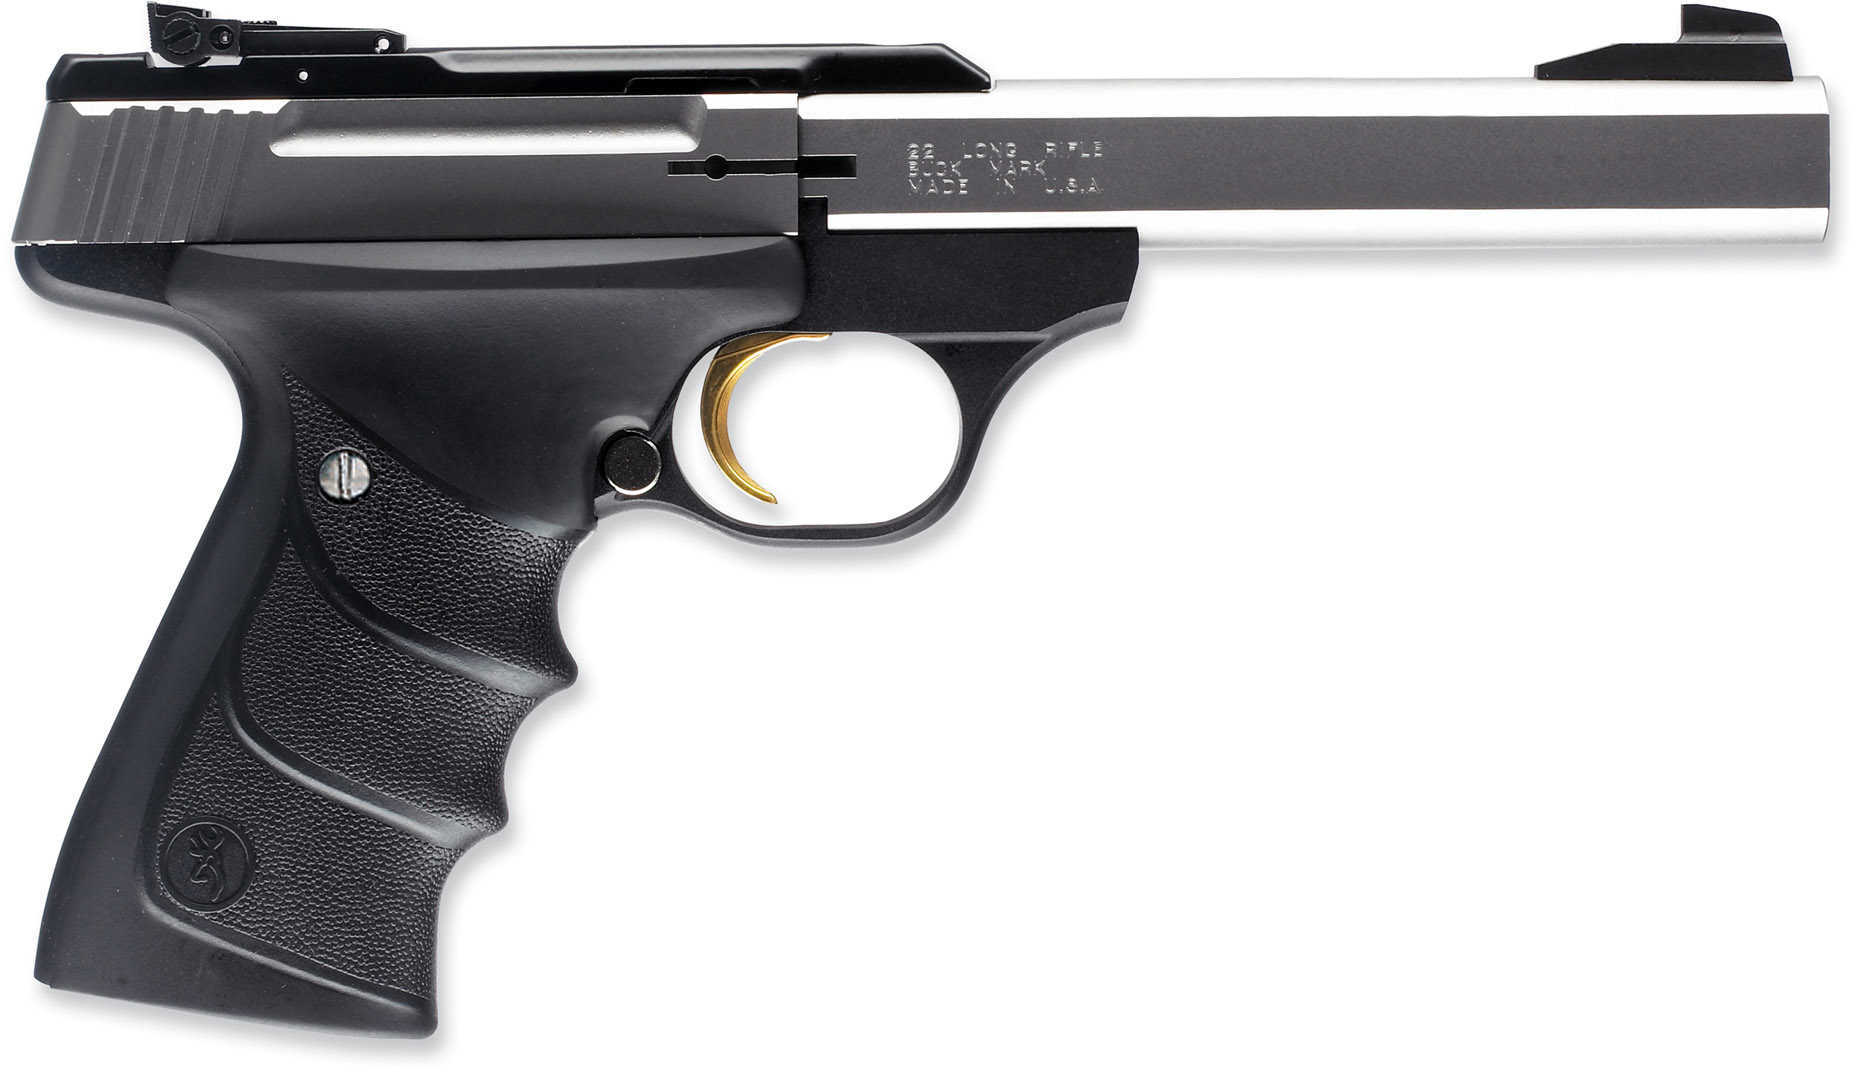 Browning Buck Mark Standard URX 22 Long Rifle Pistol 5.5" Barrel 10 Round Capacity Stainless Steel 051409490